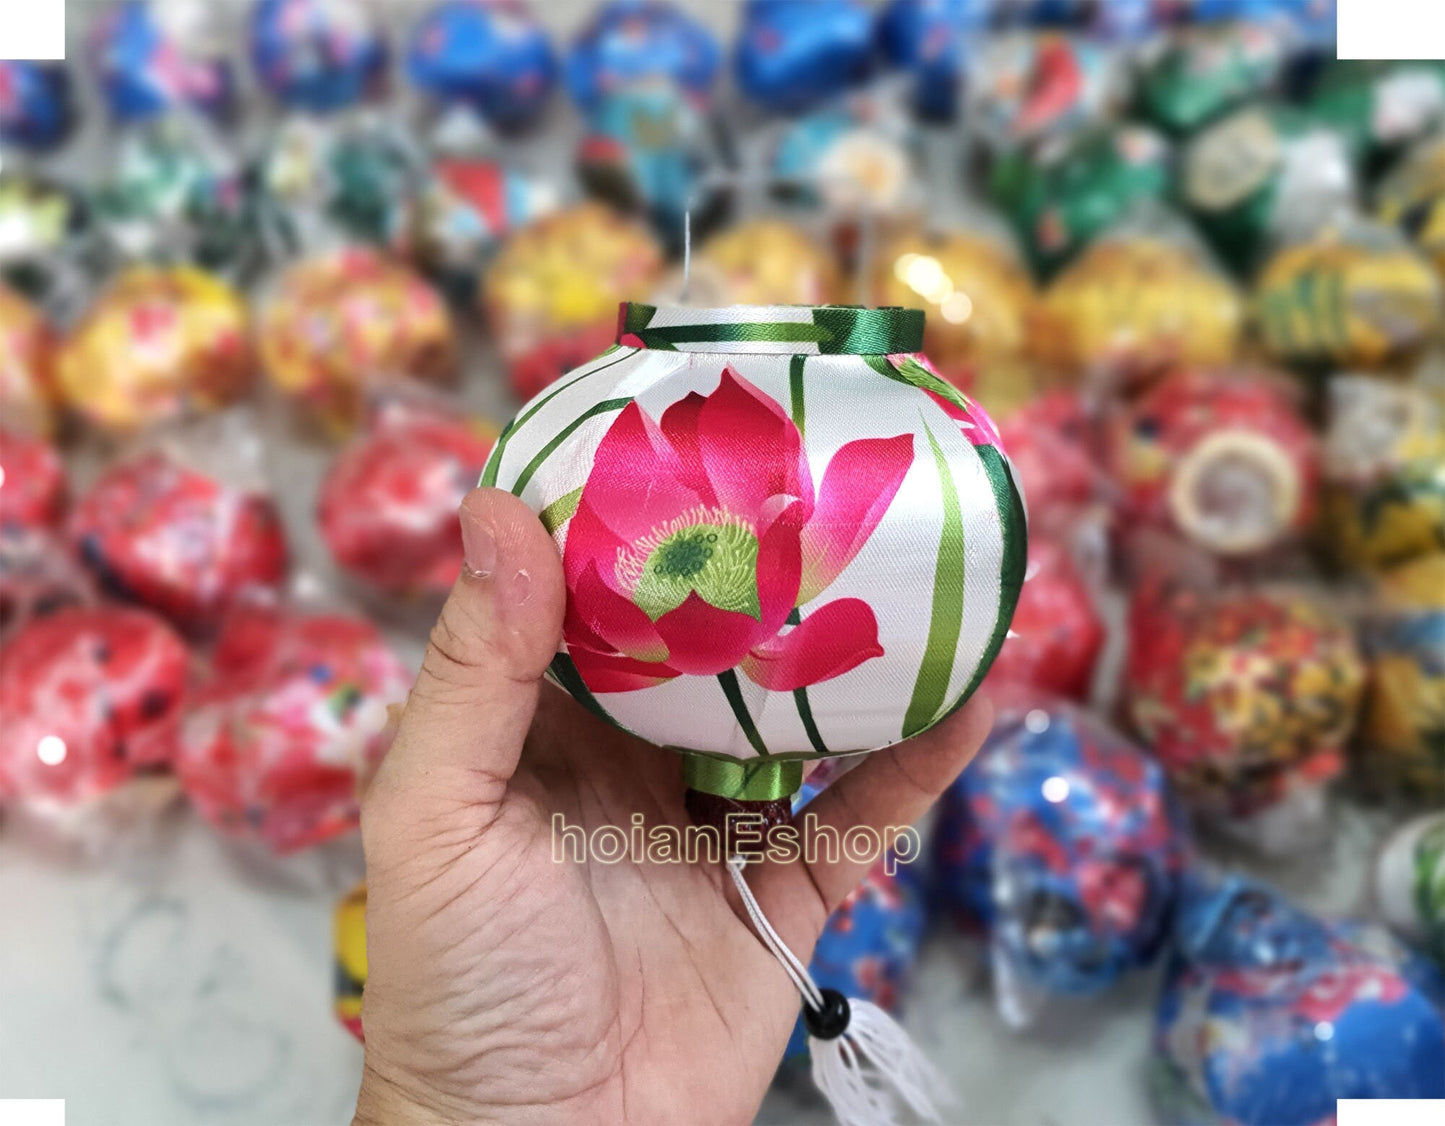 Set 100 pcs Vietnam Silk Lanterns 10cm for Moon festival, Christmas decorations Mini lanterns decorate the outdoor garden